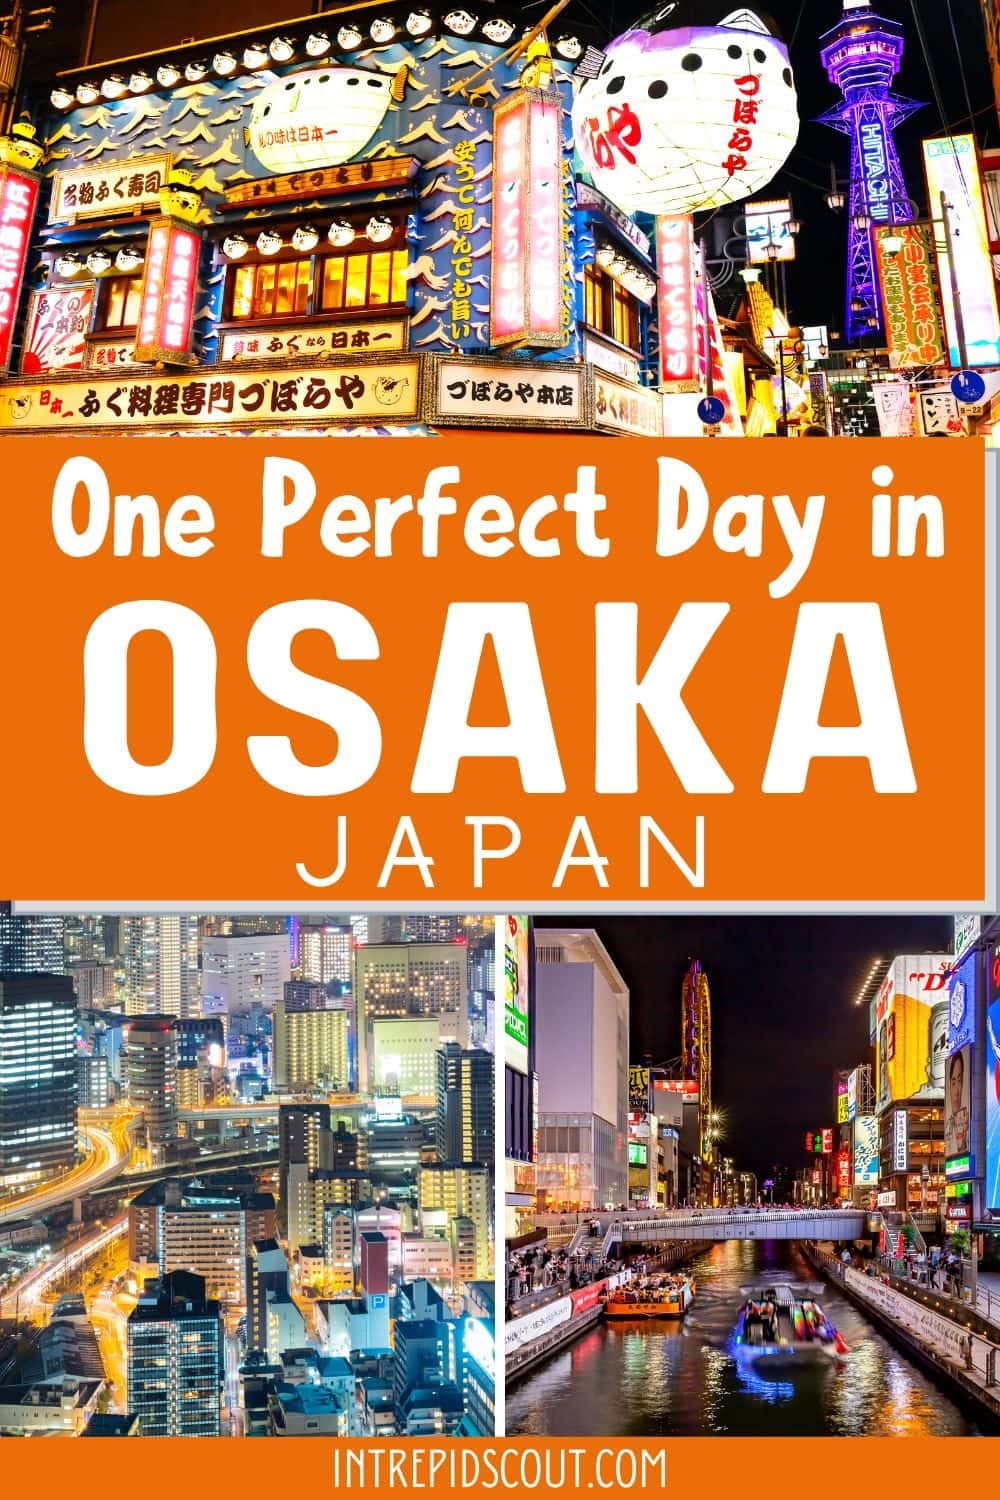 One Day in Osaka